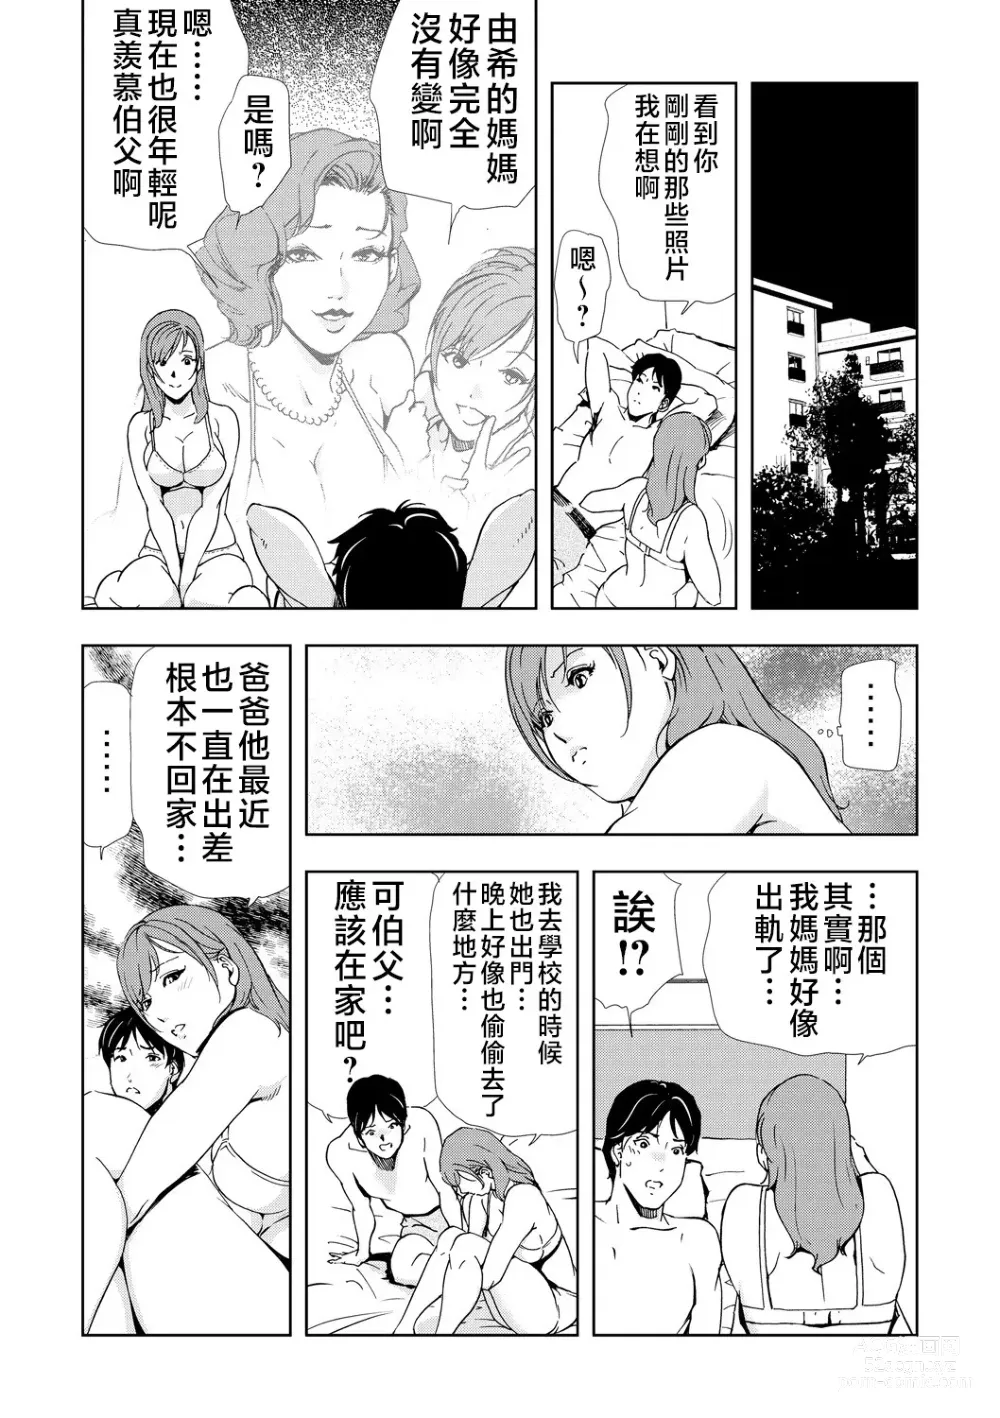 Page 7 of manga Netorare Vol.05